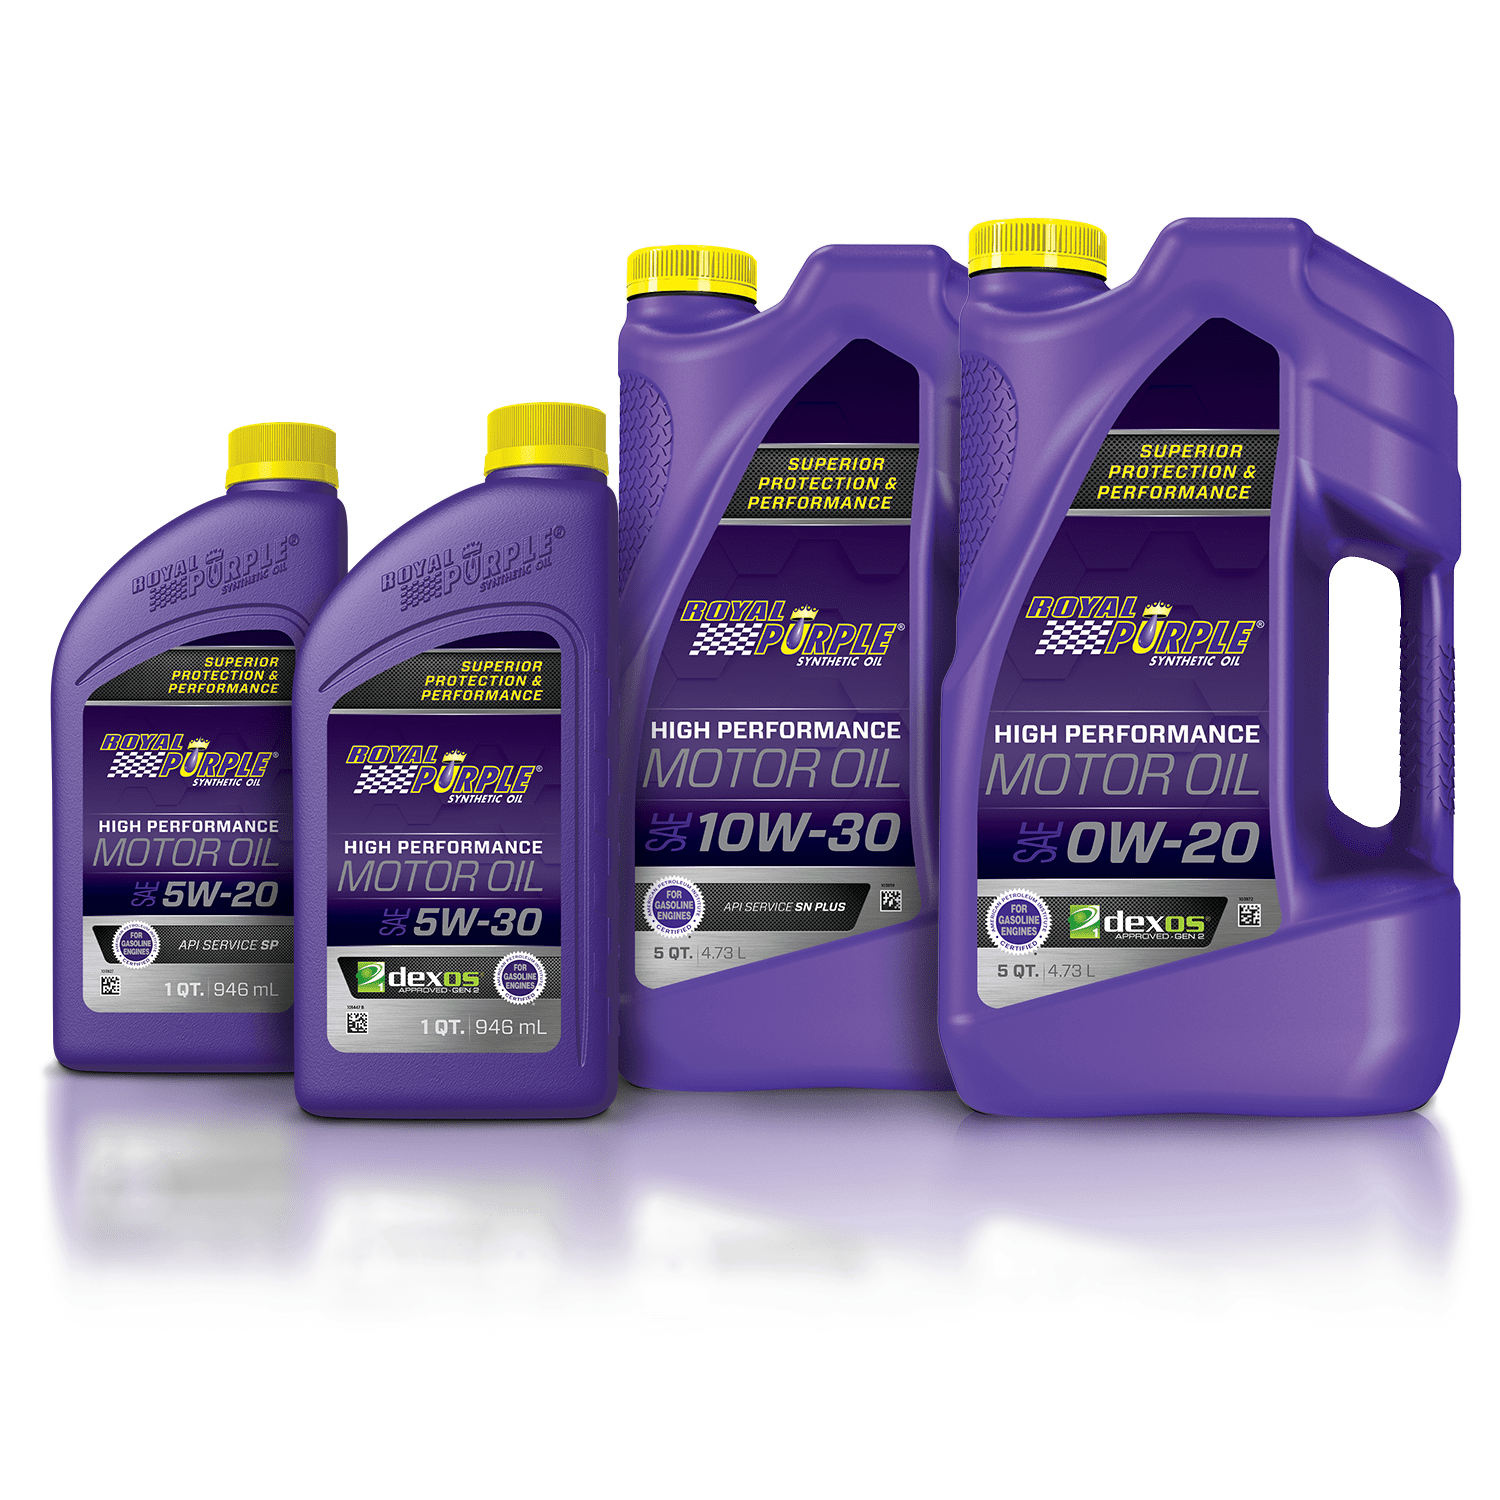 Масло performance. Royal Purple Synthetic Oil. Royal Purple масло. Моторные масла Royal Purple. Роял перпл.